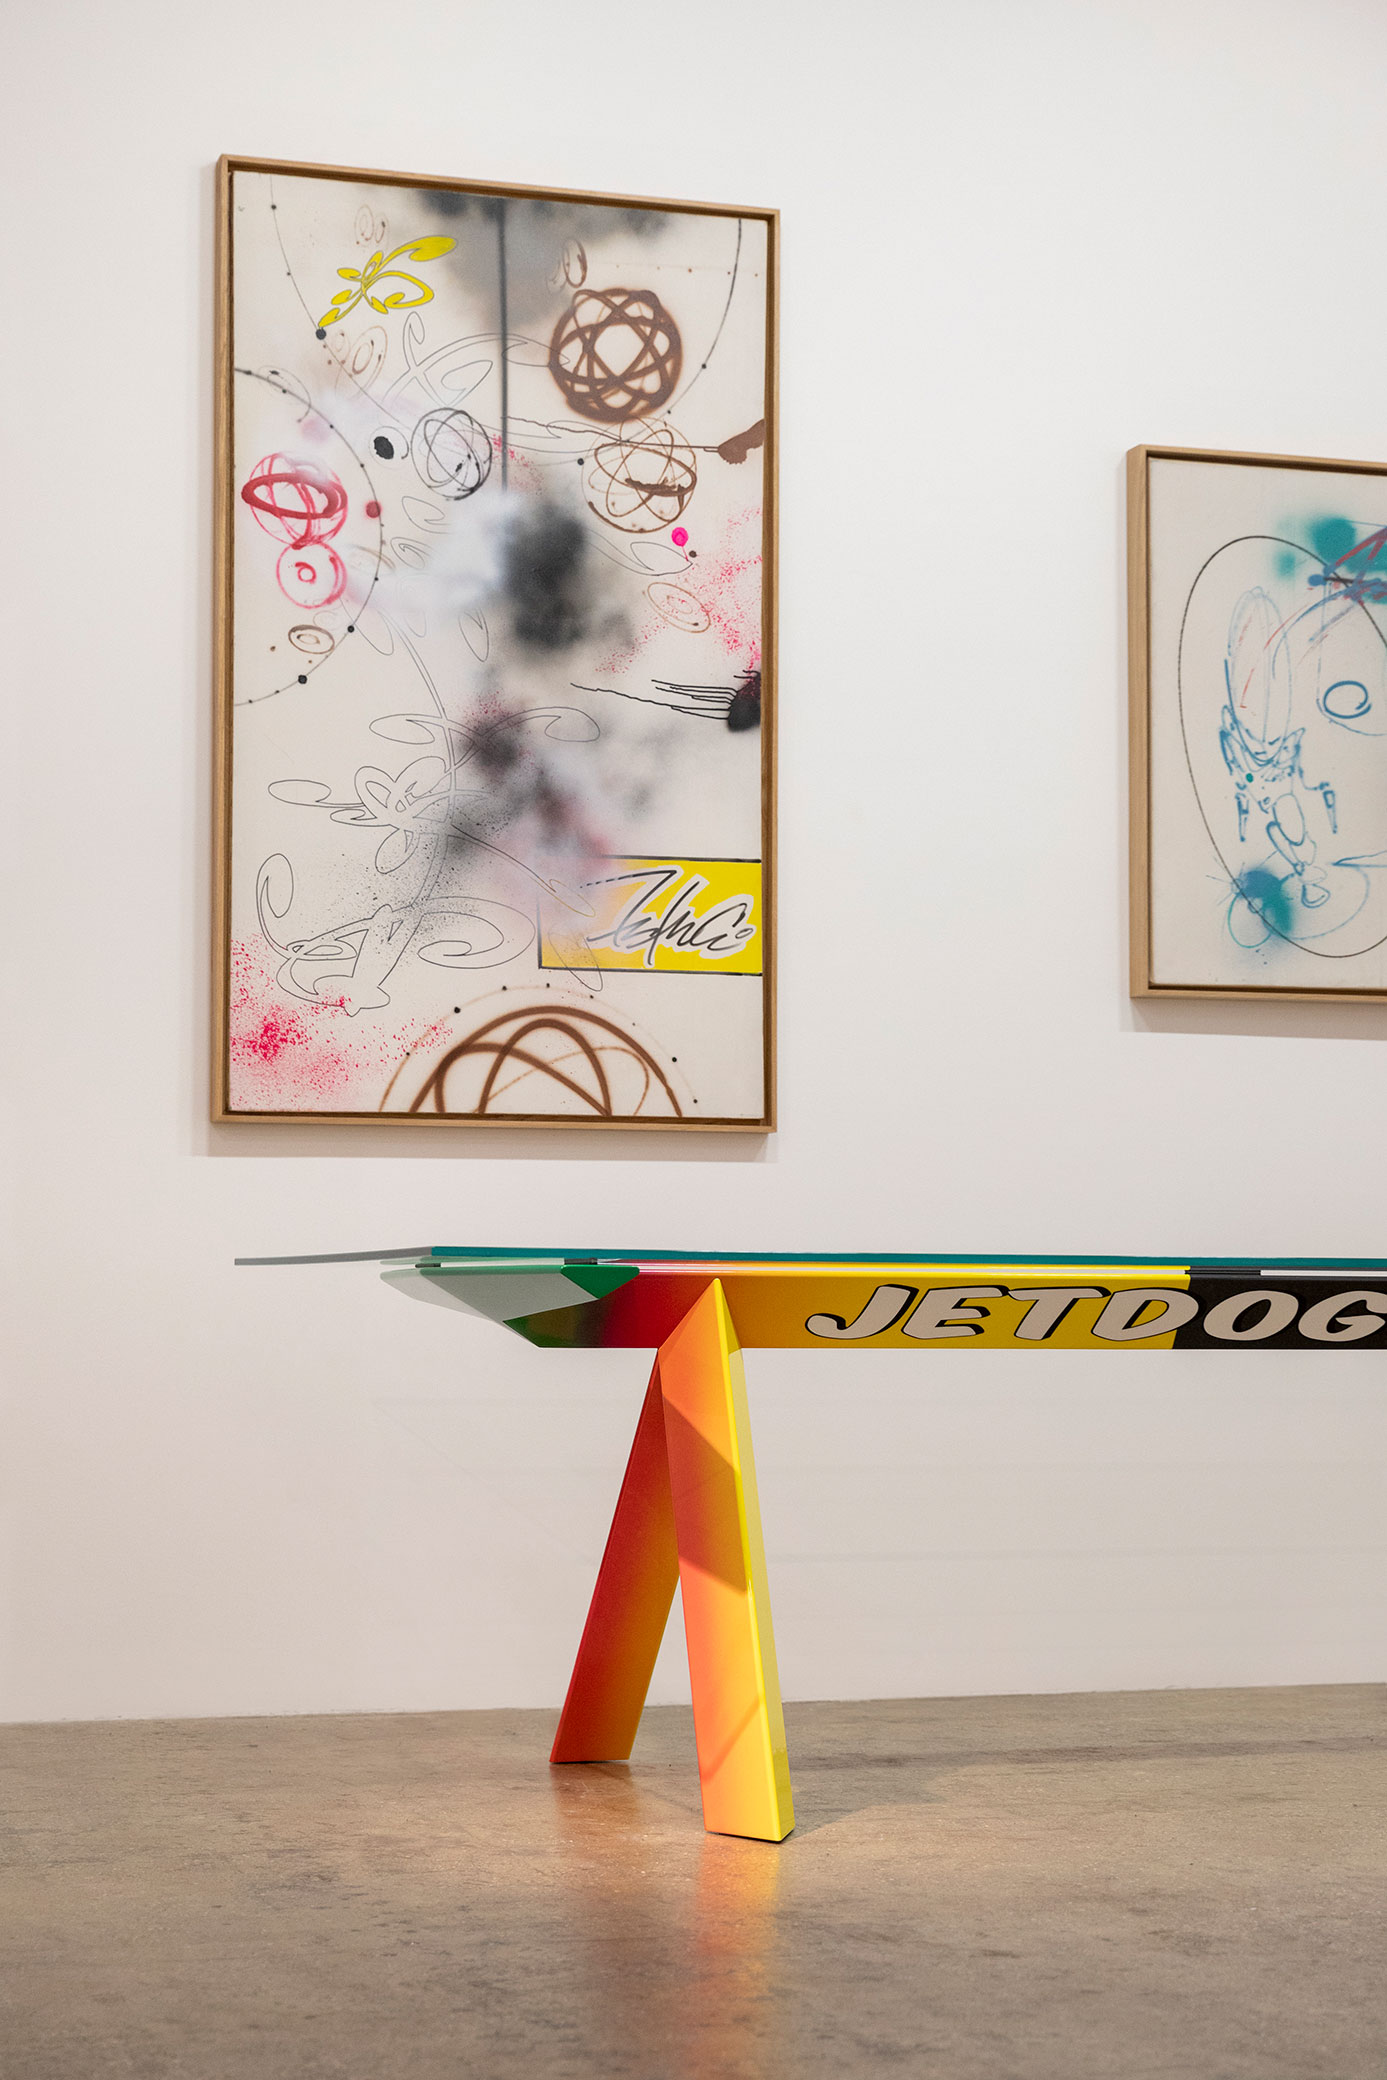 Jetdog Table - Konstantin Grcic - Table - Galerie kreo